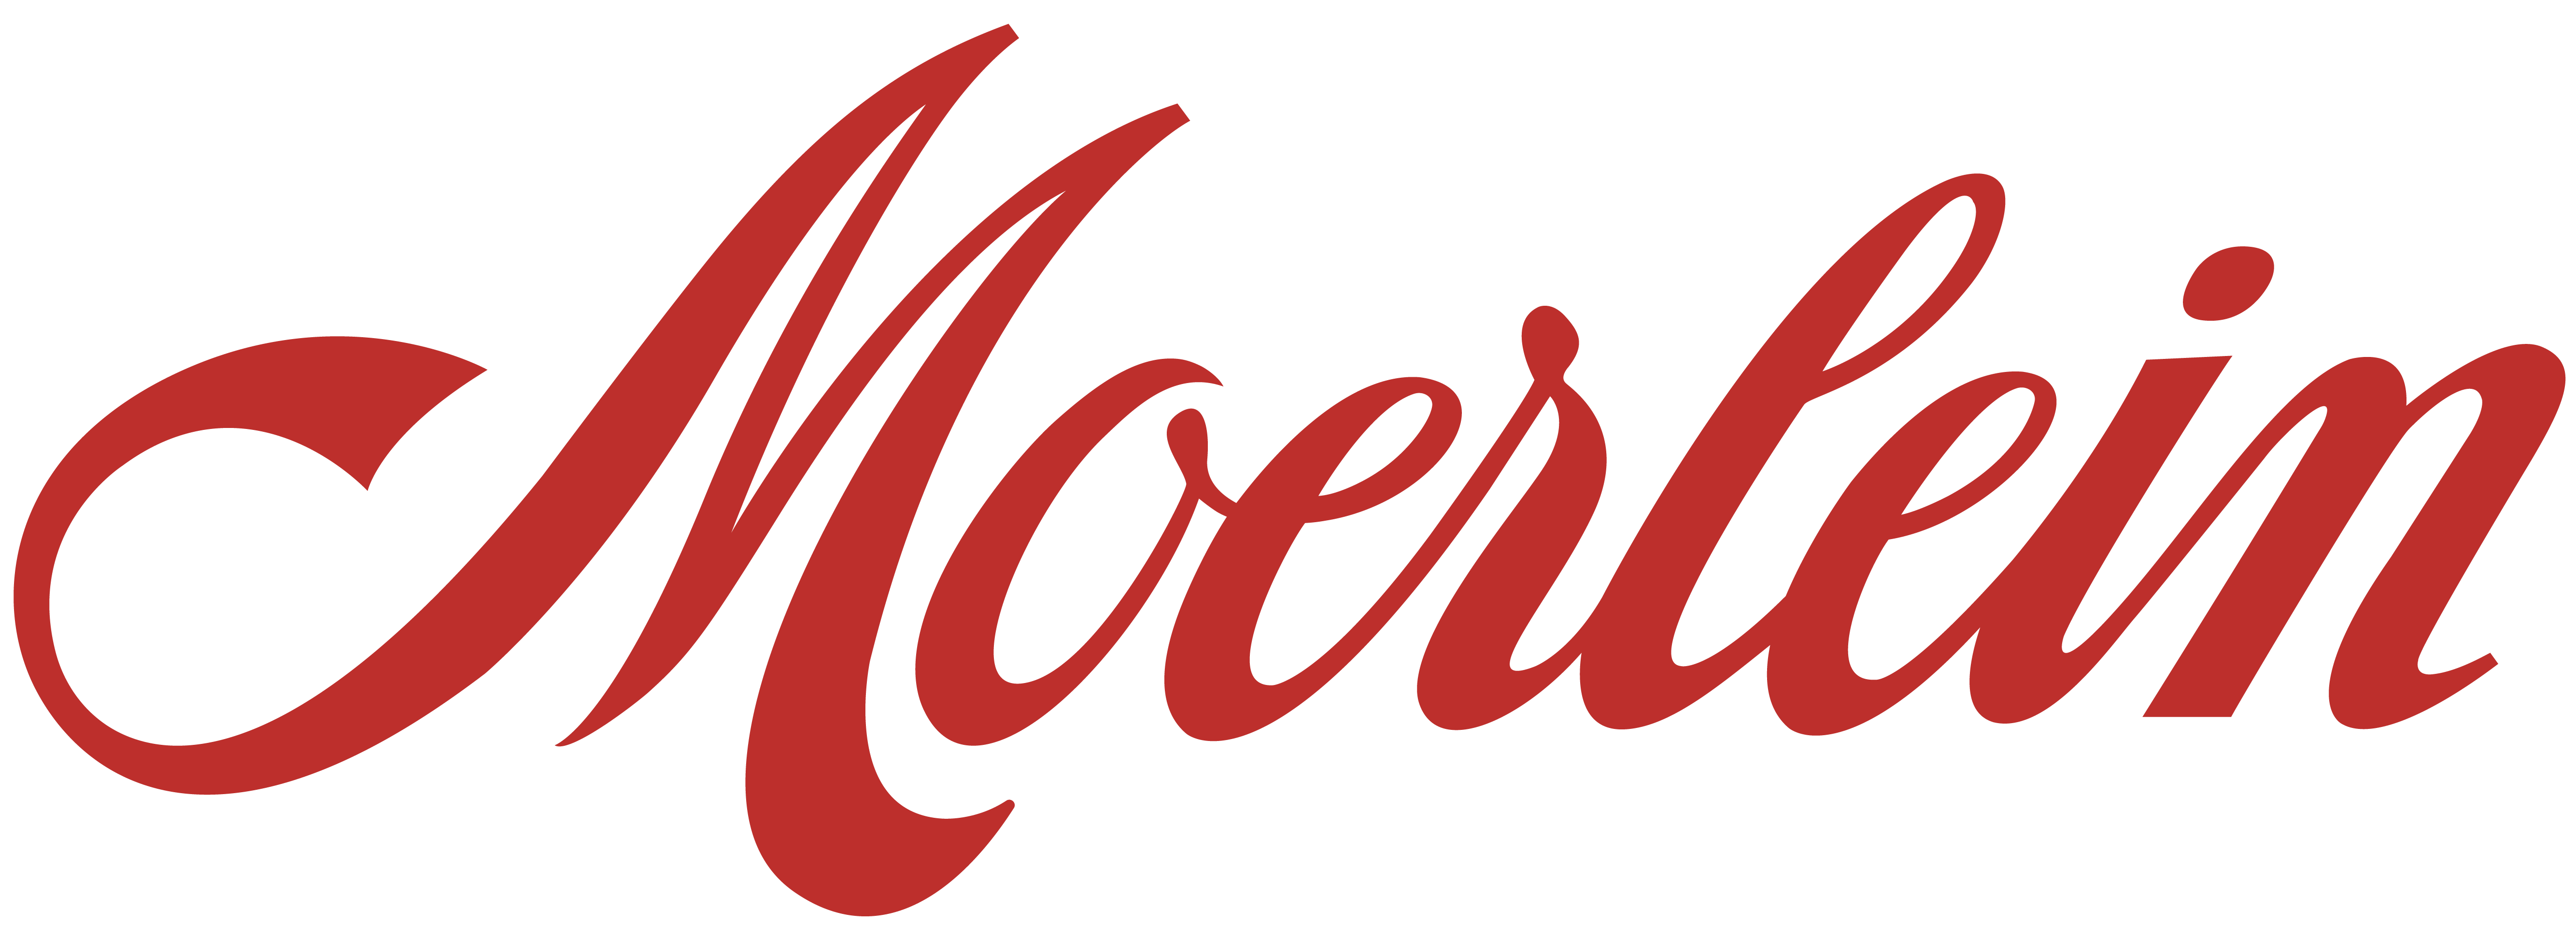 Christian Moerlein Brewing Company Script Logo